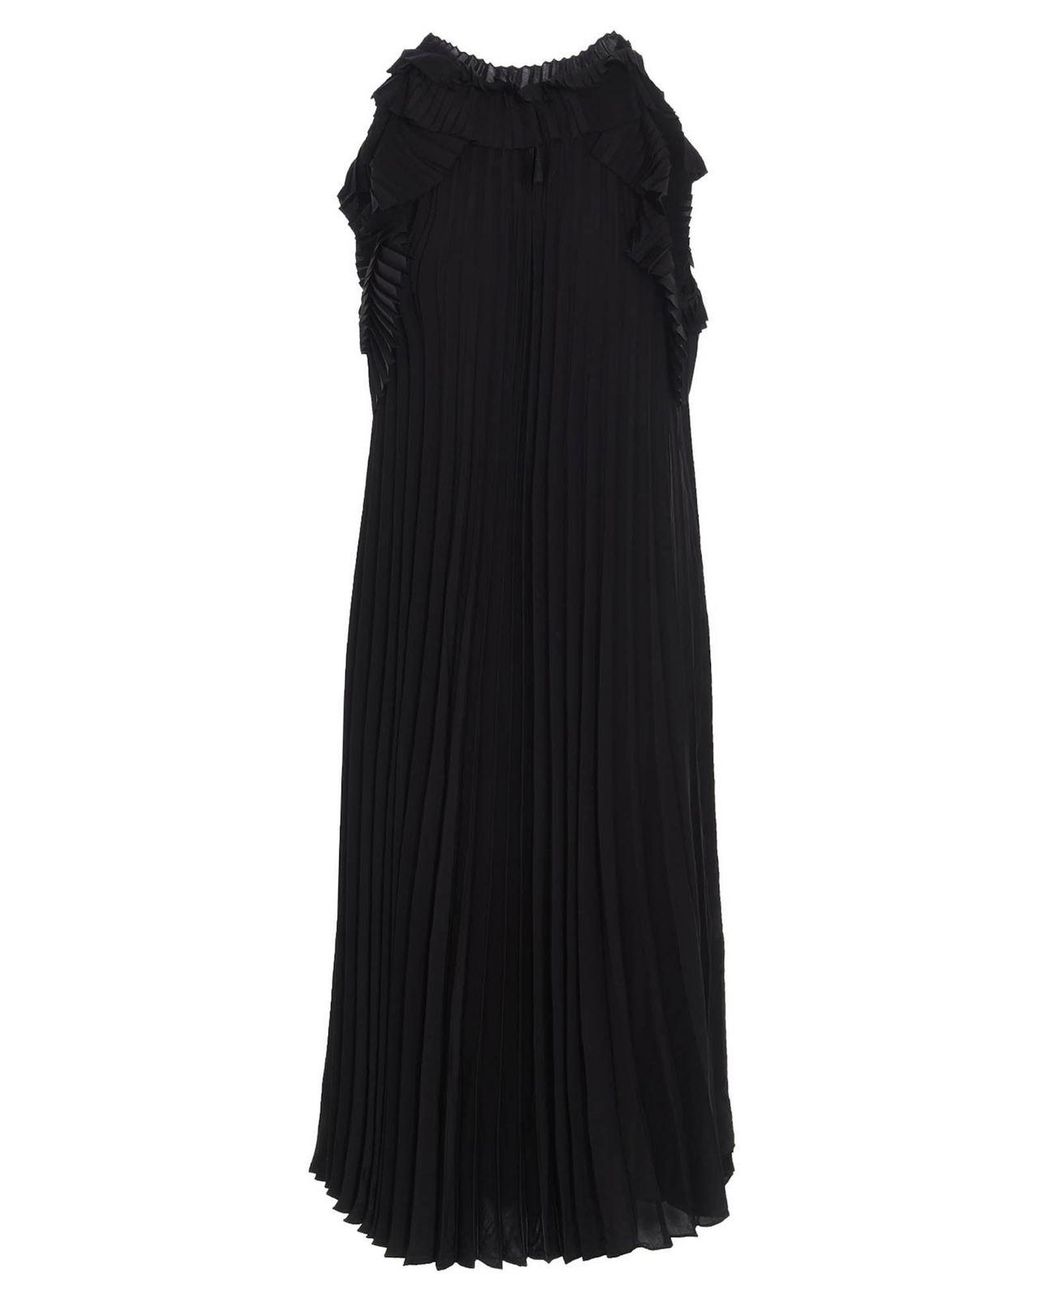 P.A.R.O.S.H. Ruffled Dress In Black - Lyst